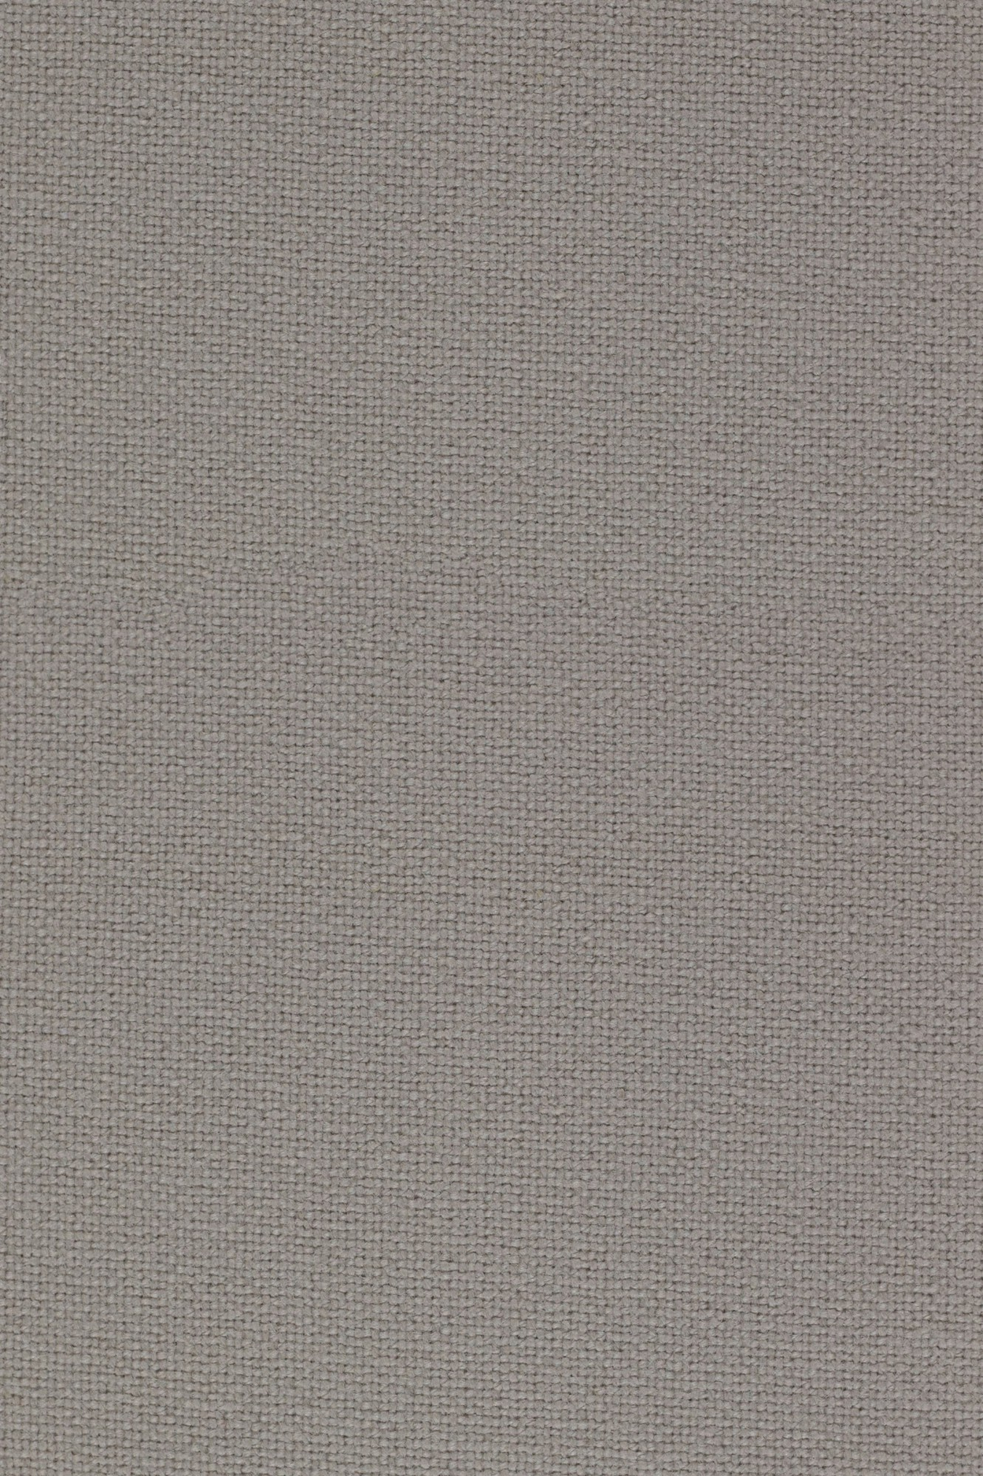 Fabric sample Hallingdal 65 113 grey